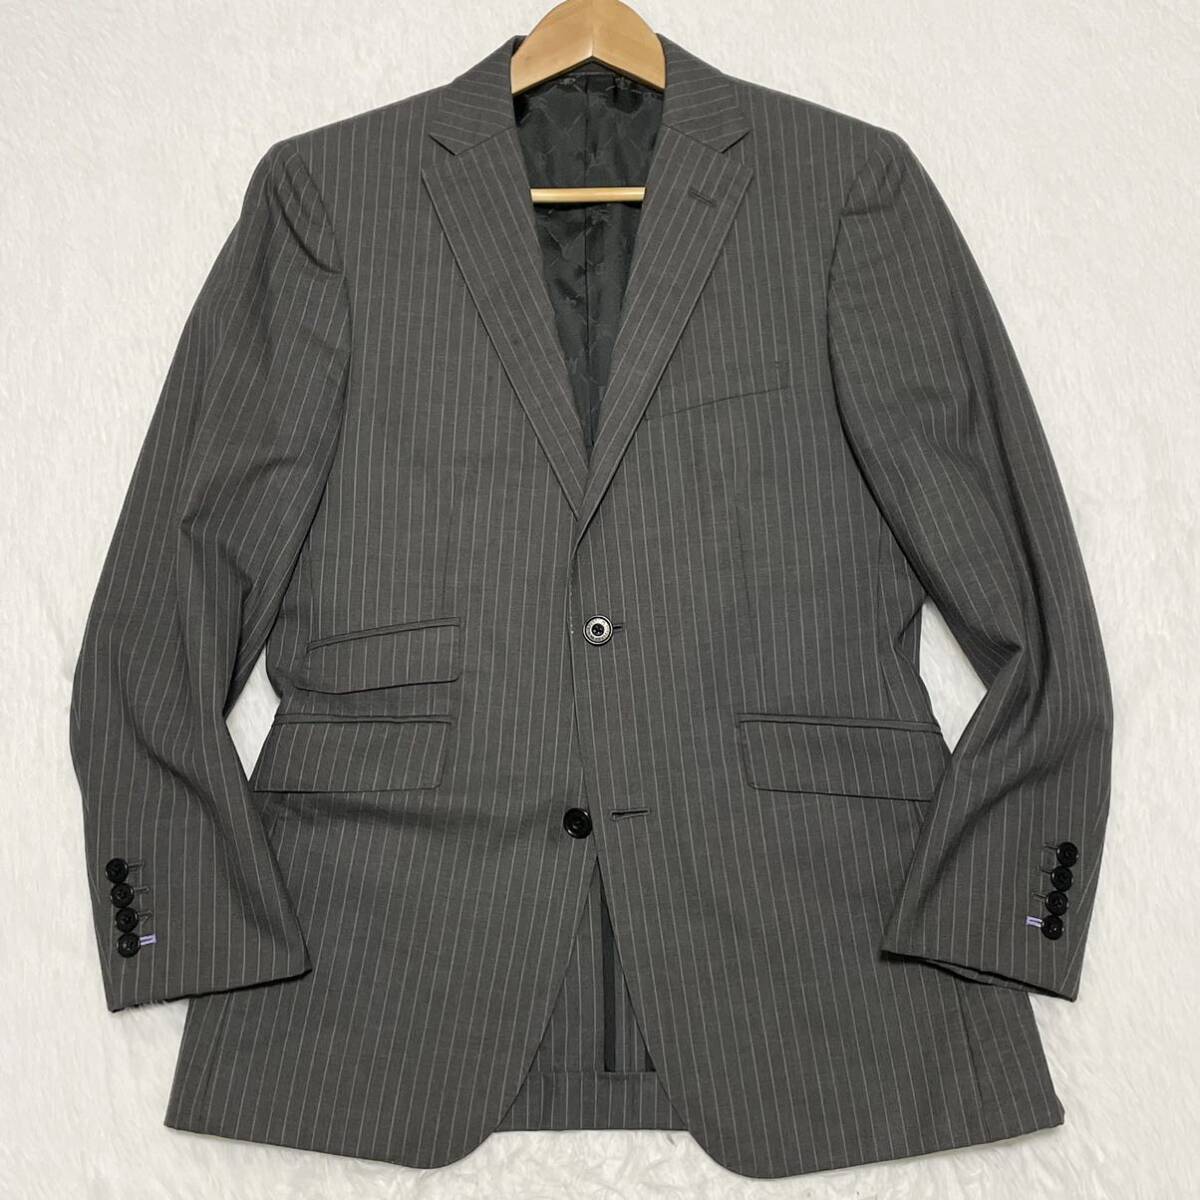  Burberry Black Label tailored jacket подкладка монограмма noba проверка Grace -tsusuper100*s BURBERRY BLACK LABEL M 3891